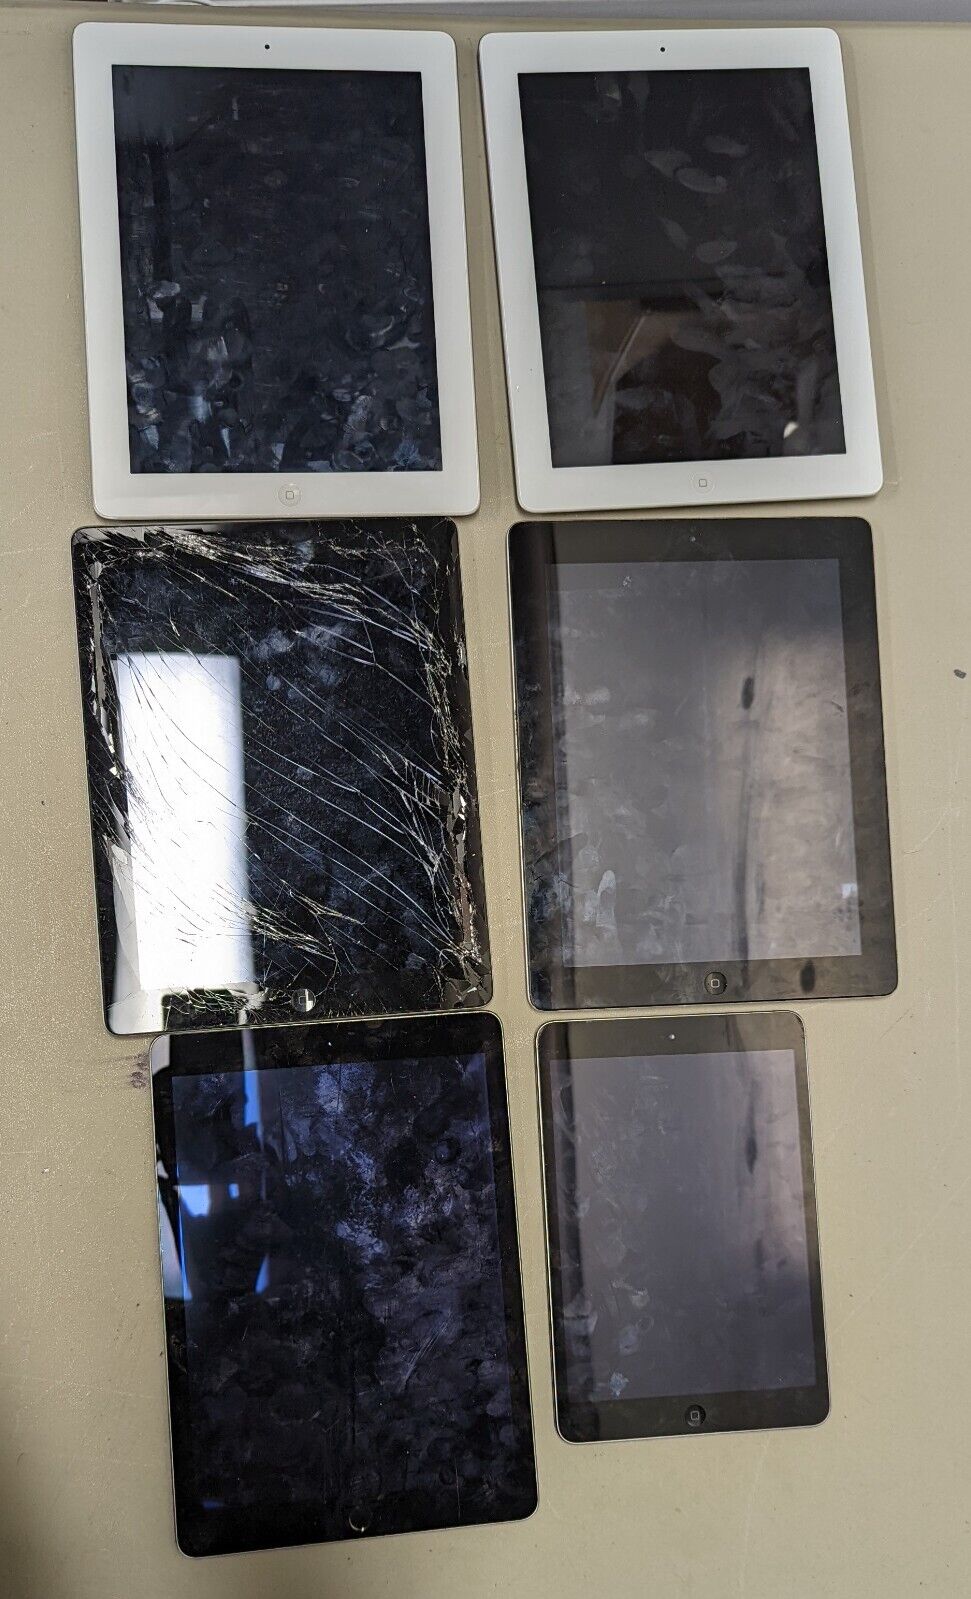 Lot of 6 Assorted Apple iPads |2nd Gen, 4th Gen, Mini 2, Air 2| (Parts/Repair)